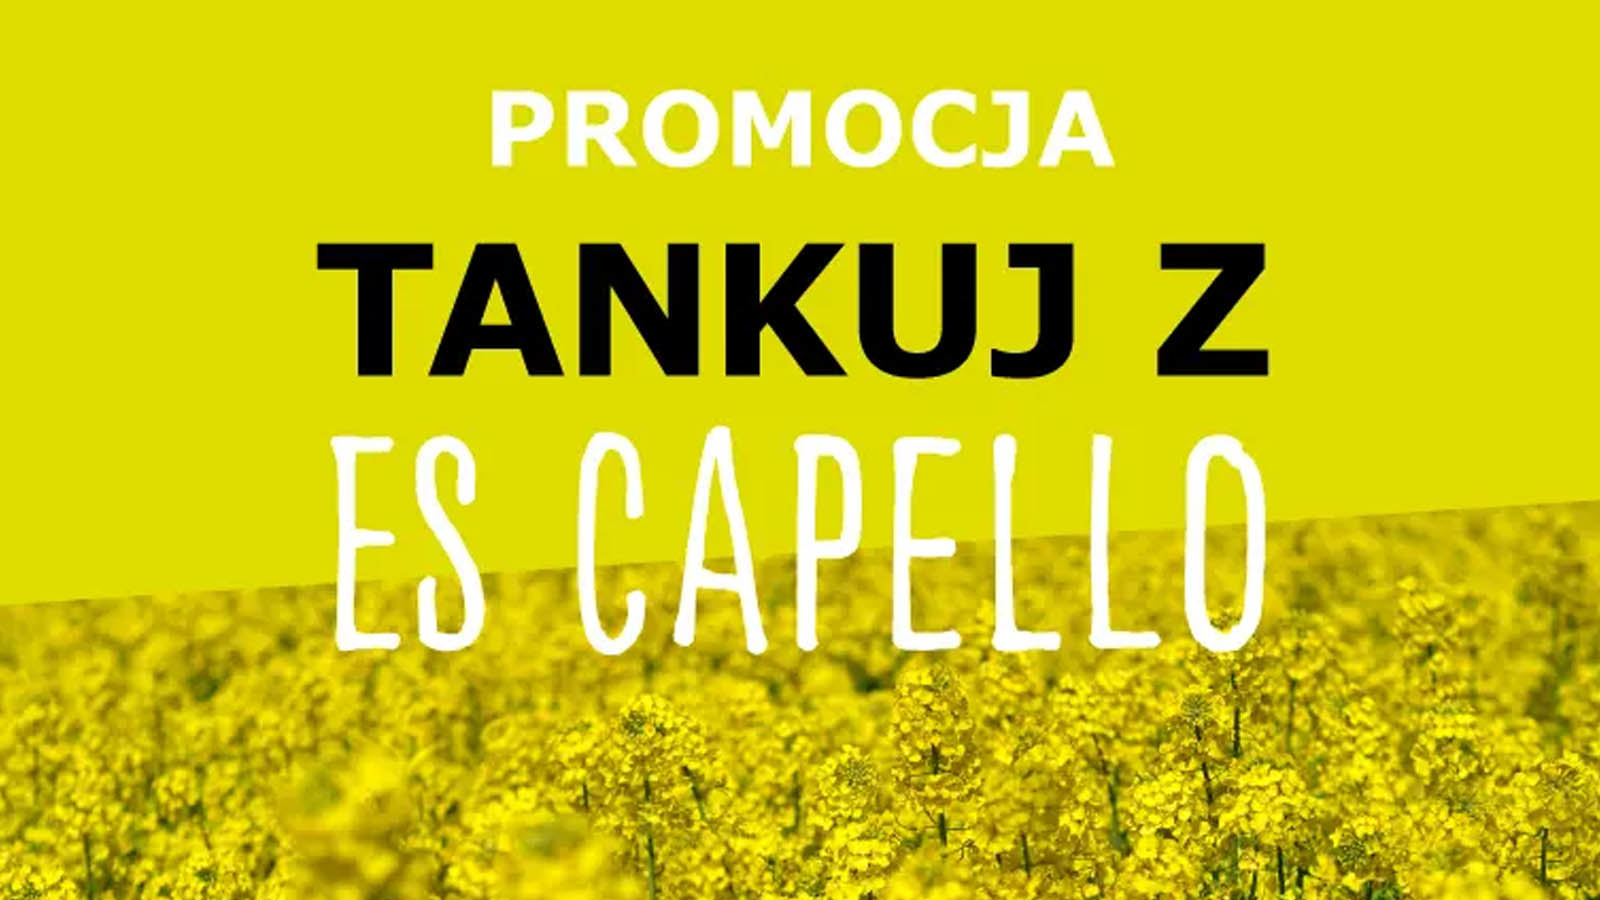 promocja_tankuj_z_es_capello-1600x900